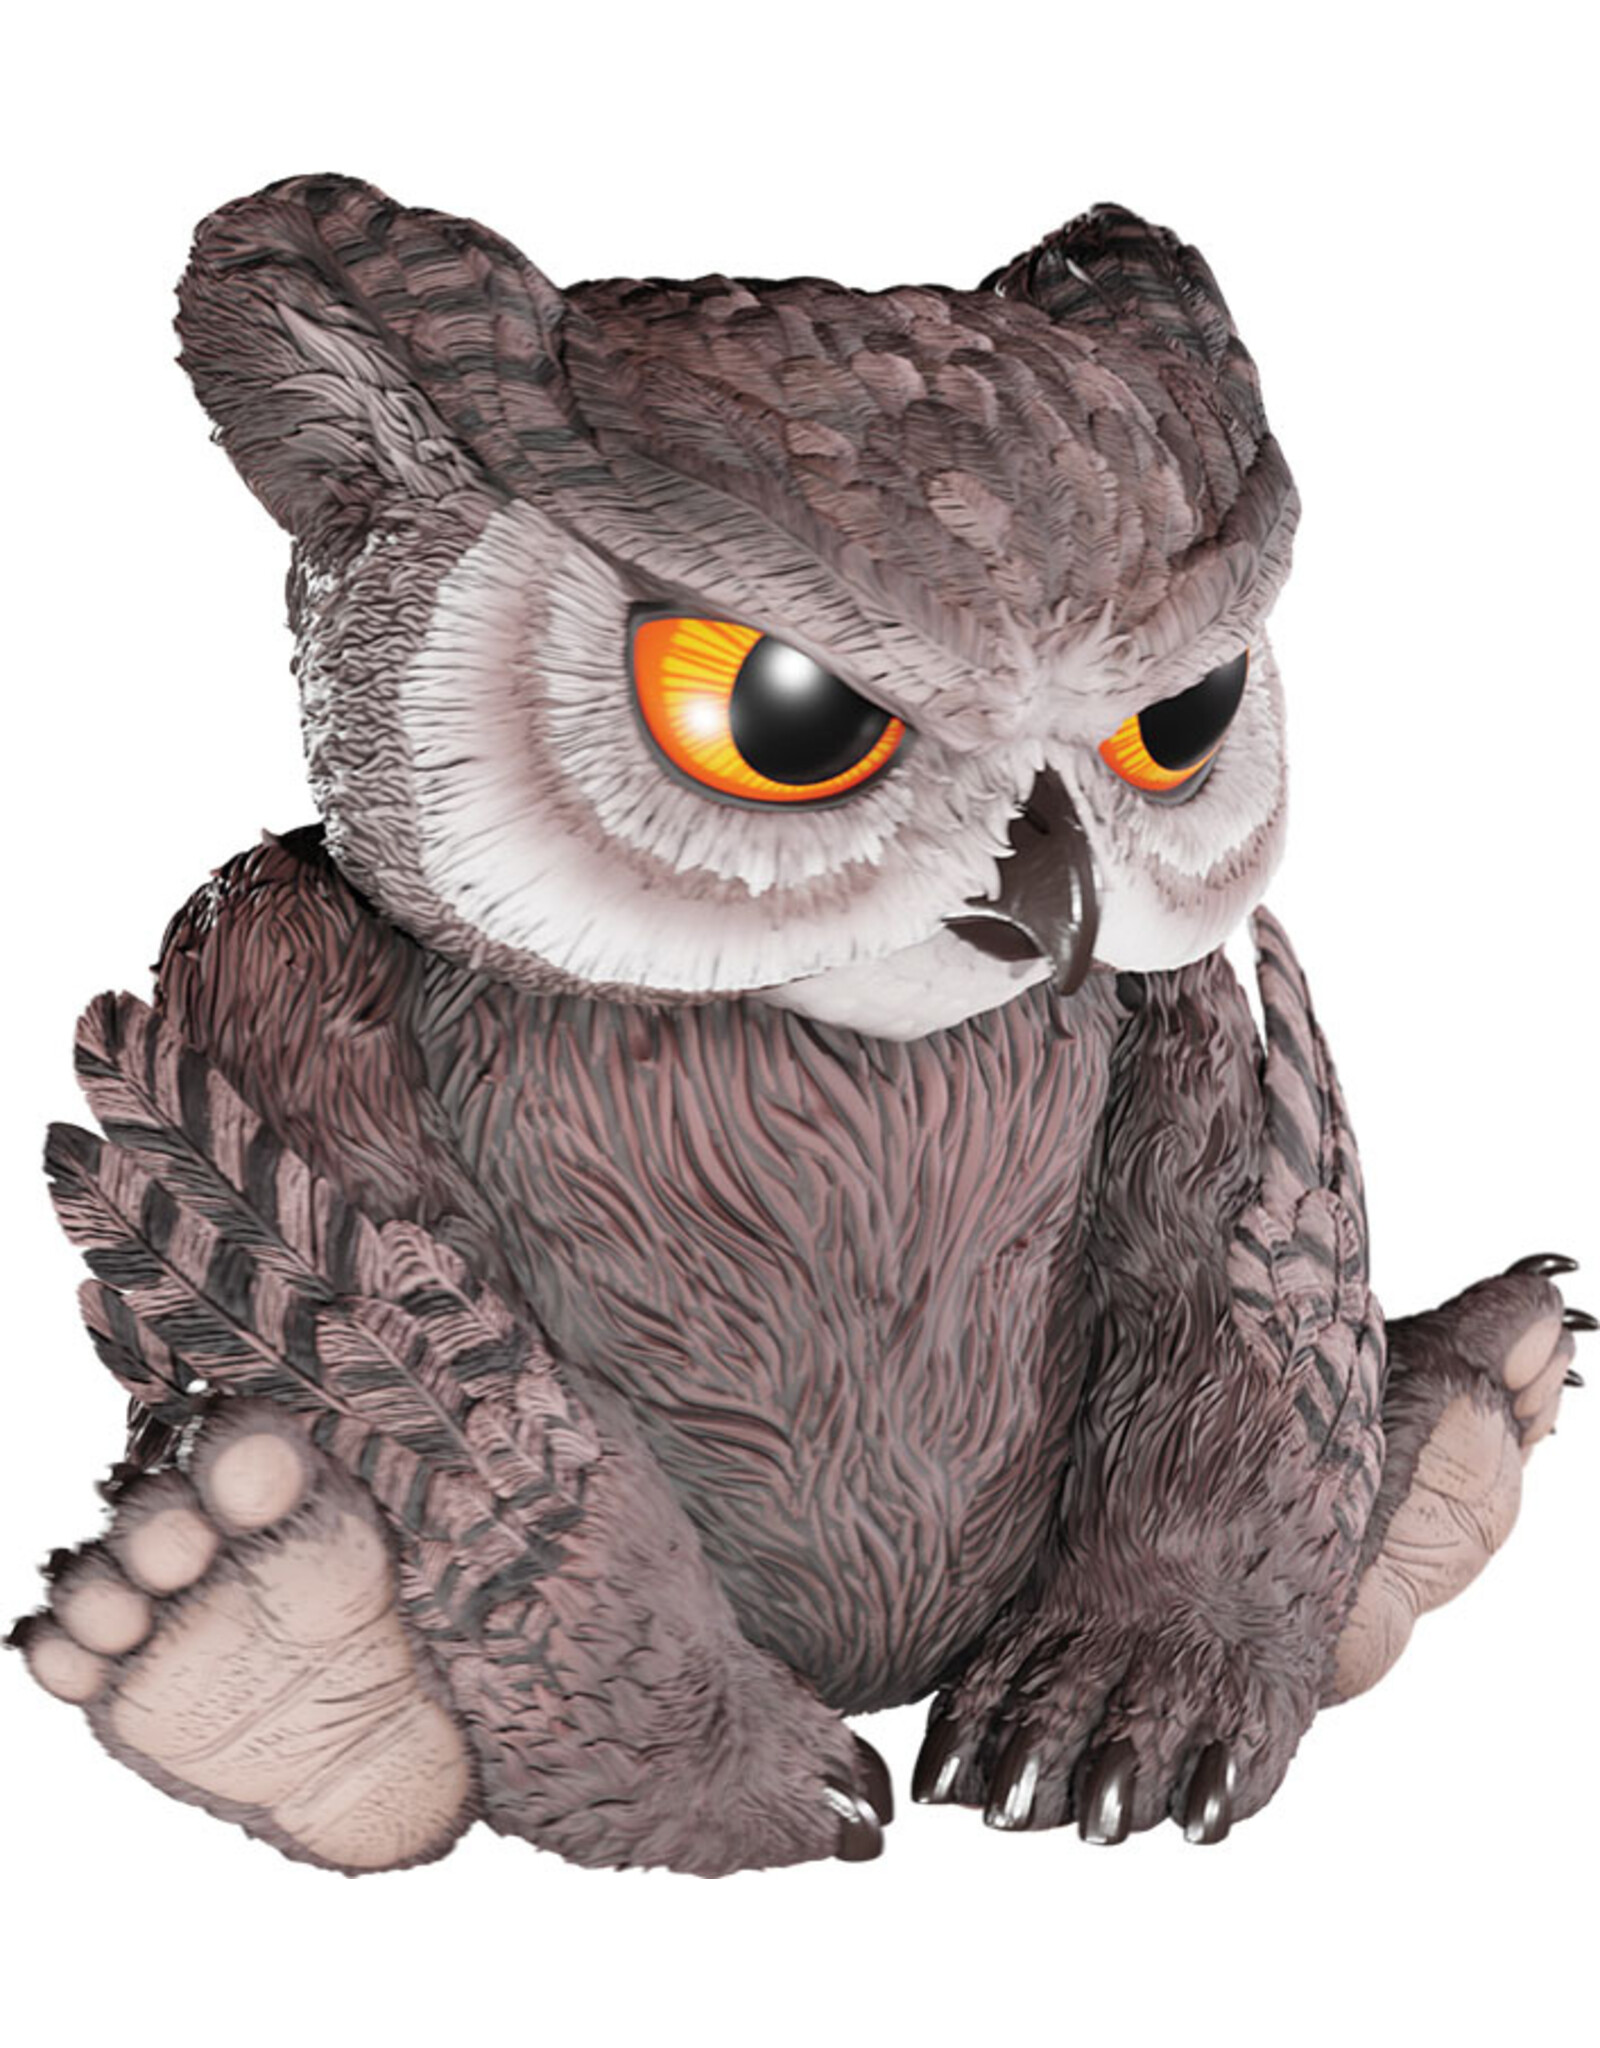 WizKids D&D: Replicas of the Realms - Baby Owlbear Life-Size Figure